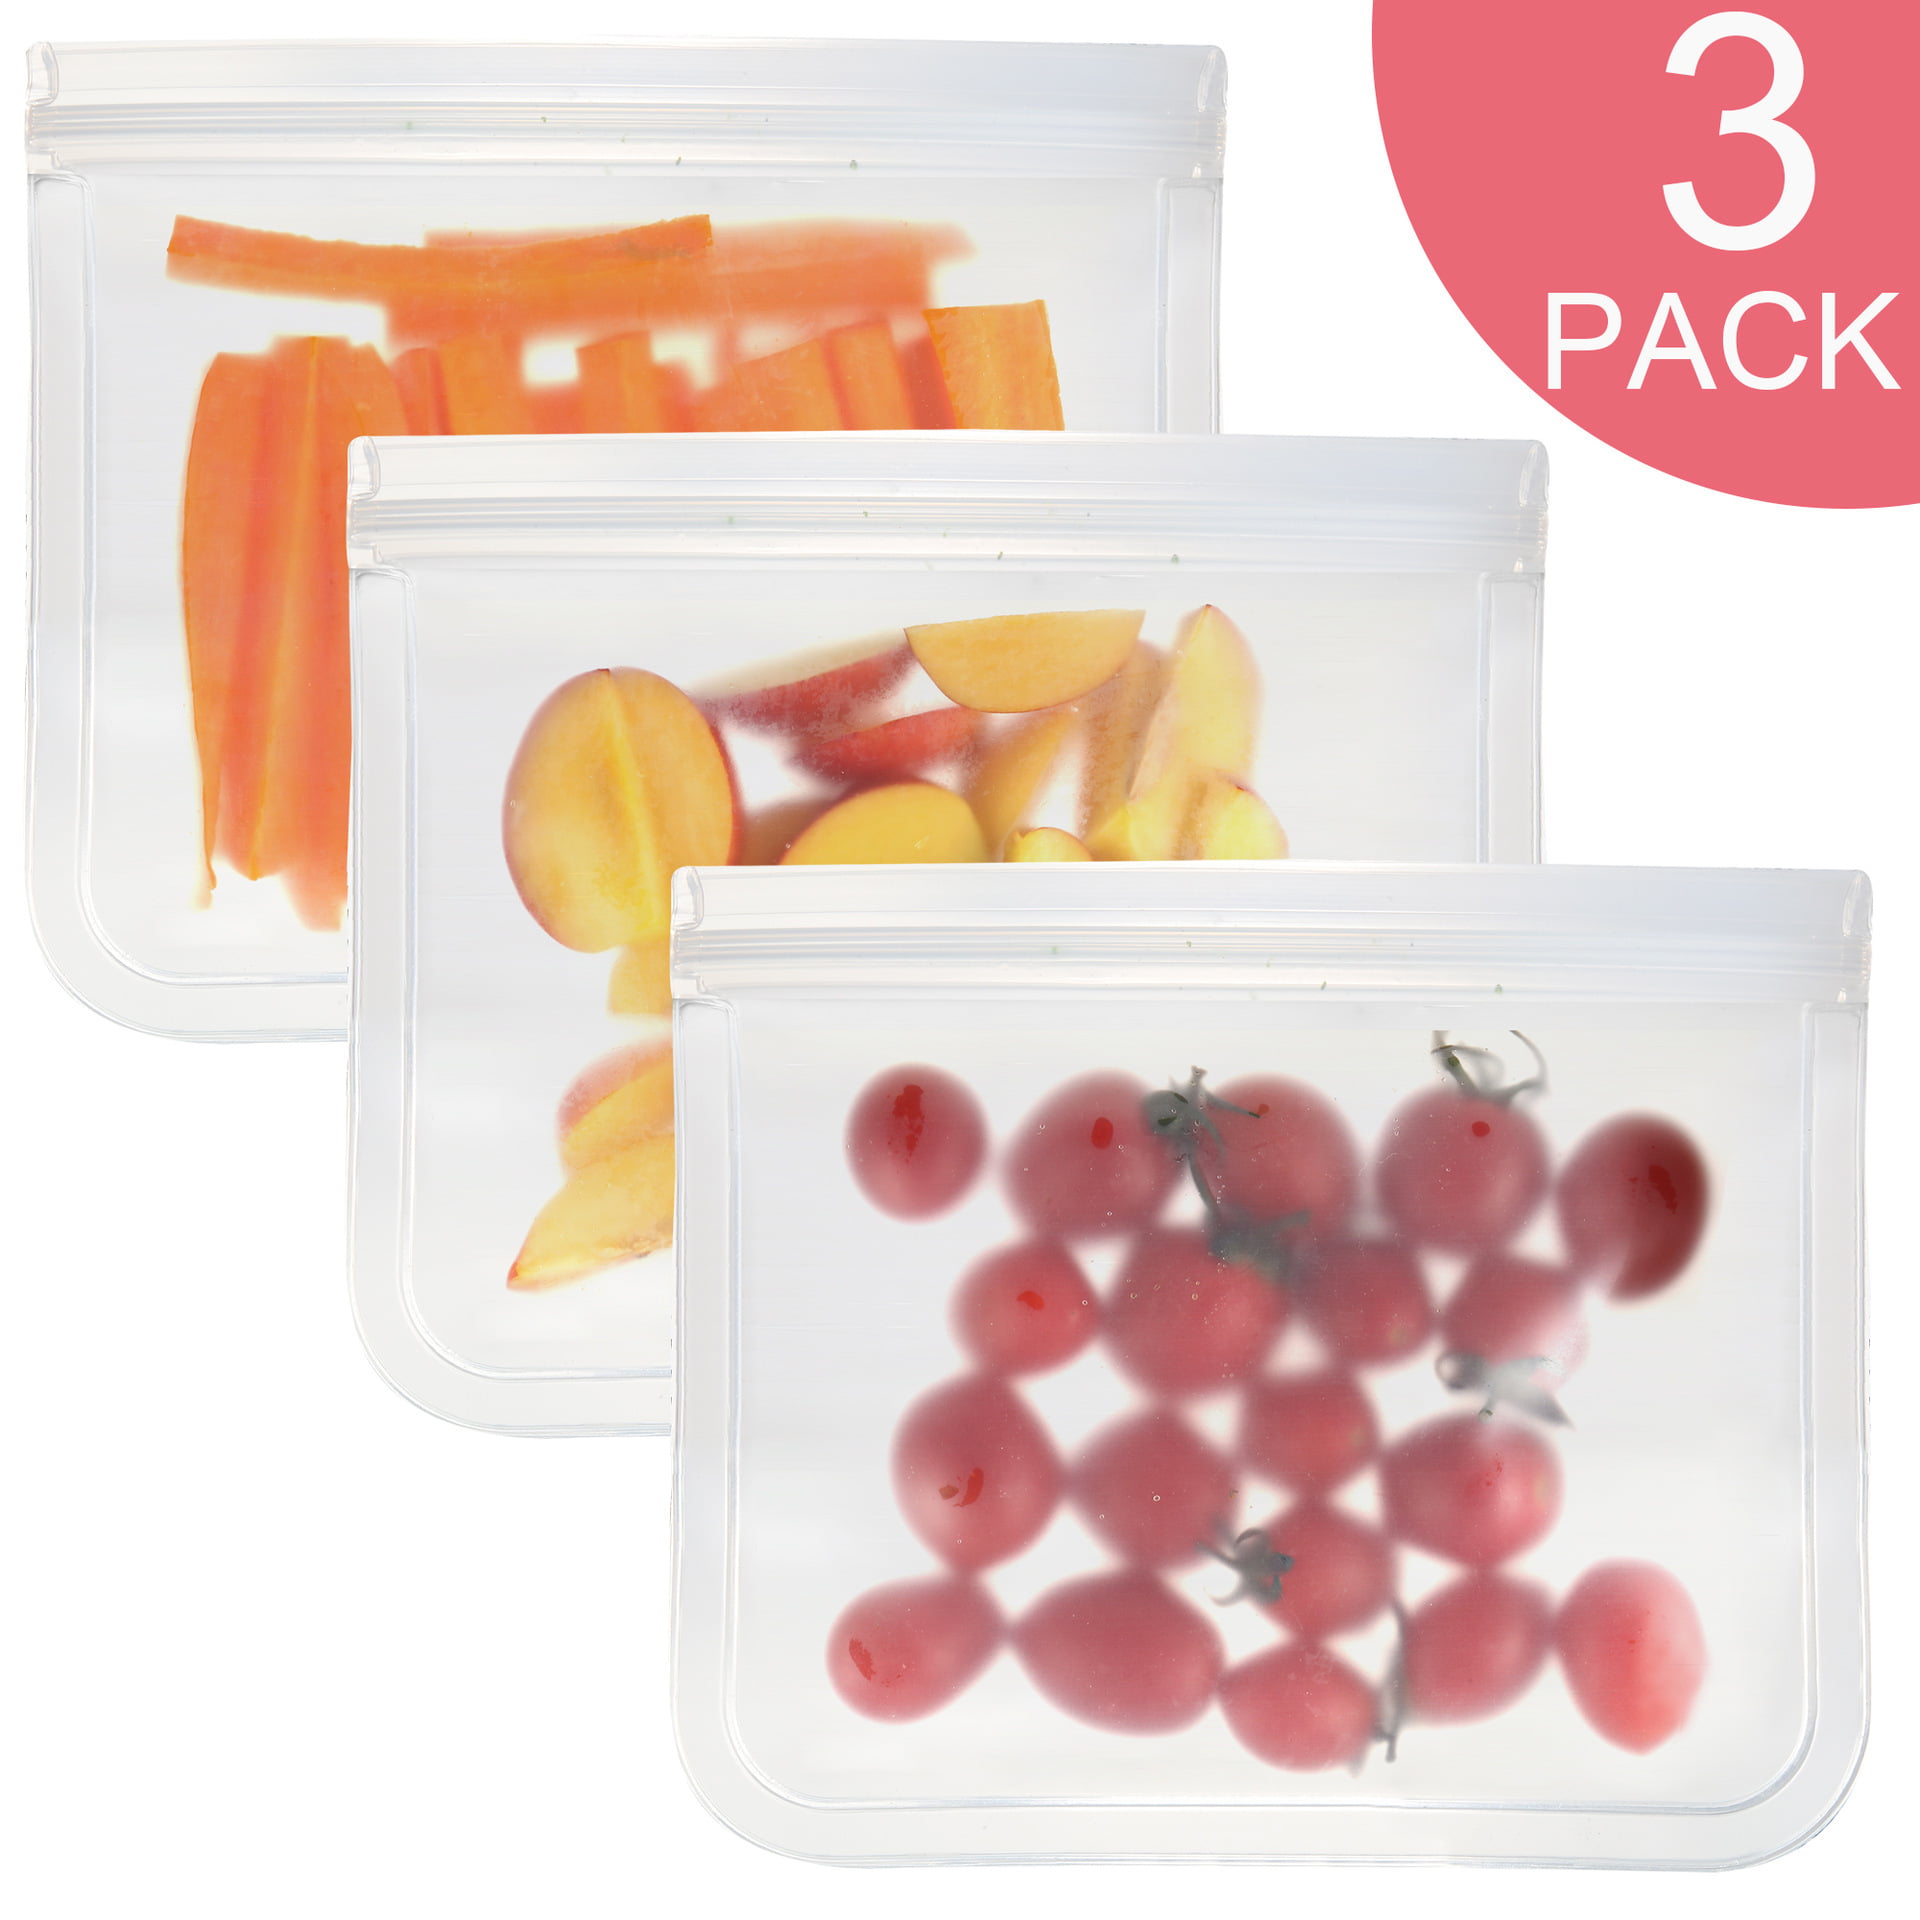 1 PCS Reusable Silicone Food Fresh Bag Seal Storage Container Freezer Ziplock US 